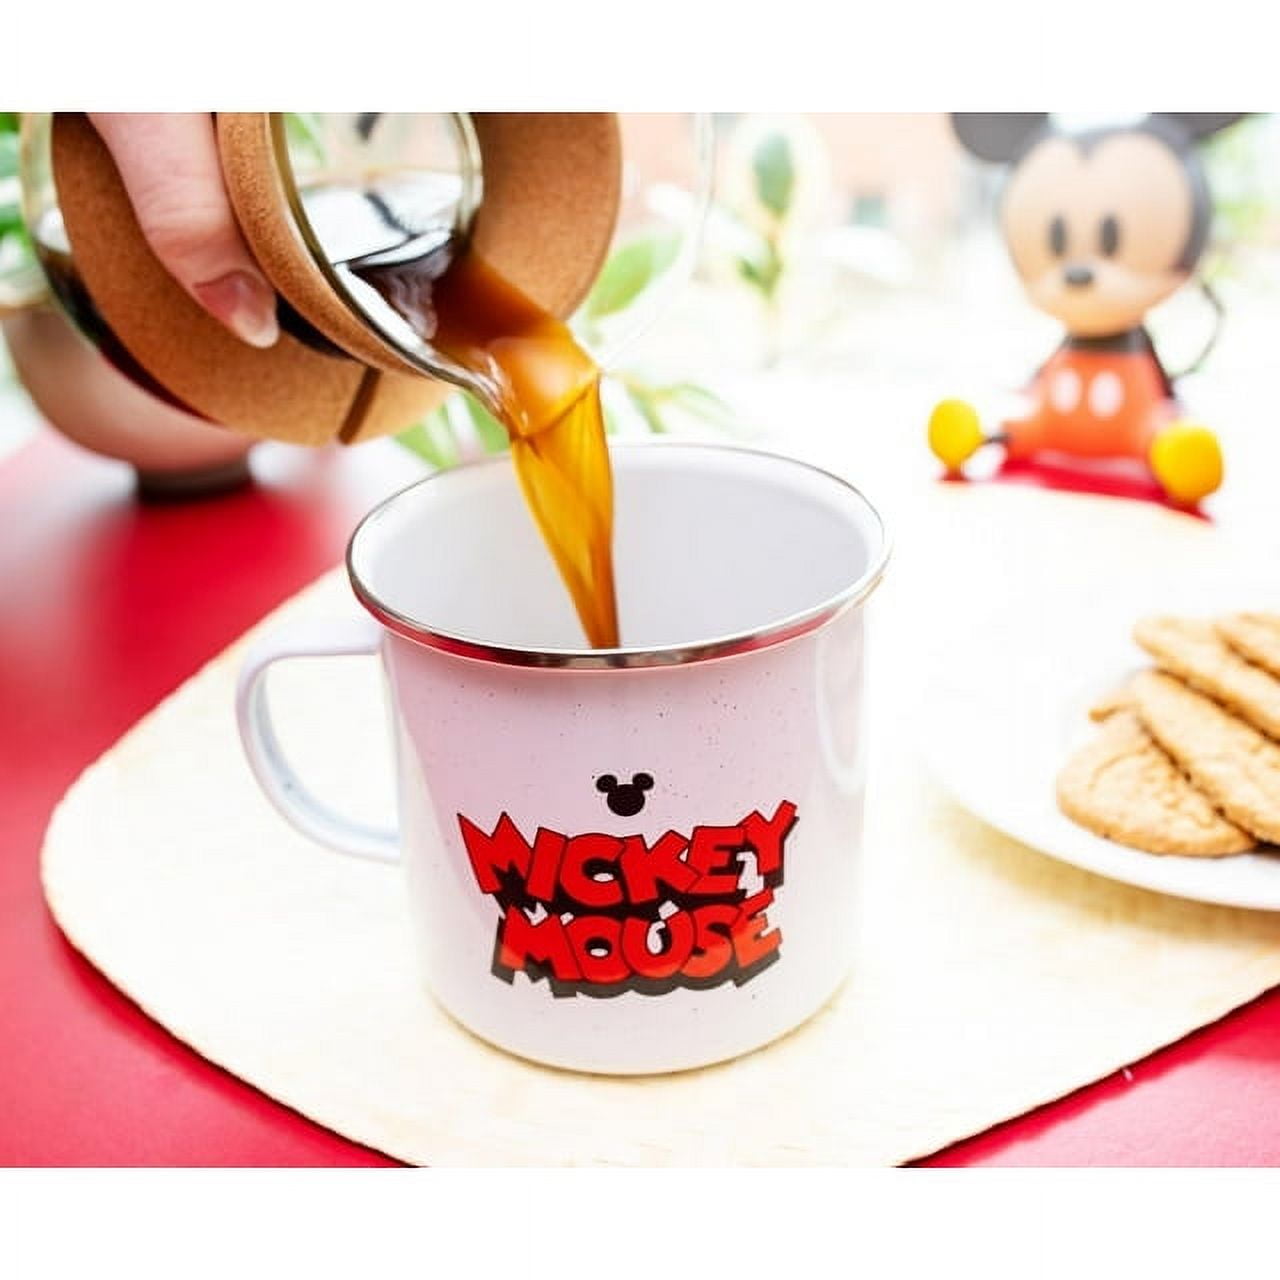 Disney Mickey Face Shucks Whoopee Enamel Camper Coffee Mug, 21 Ounces 